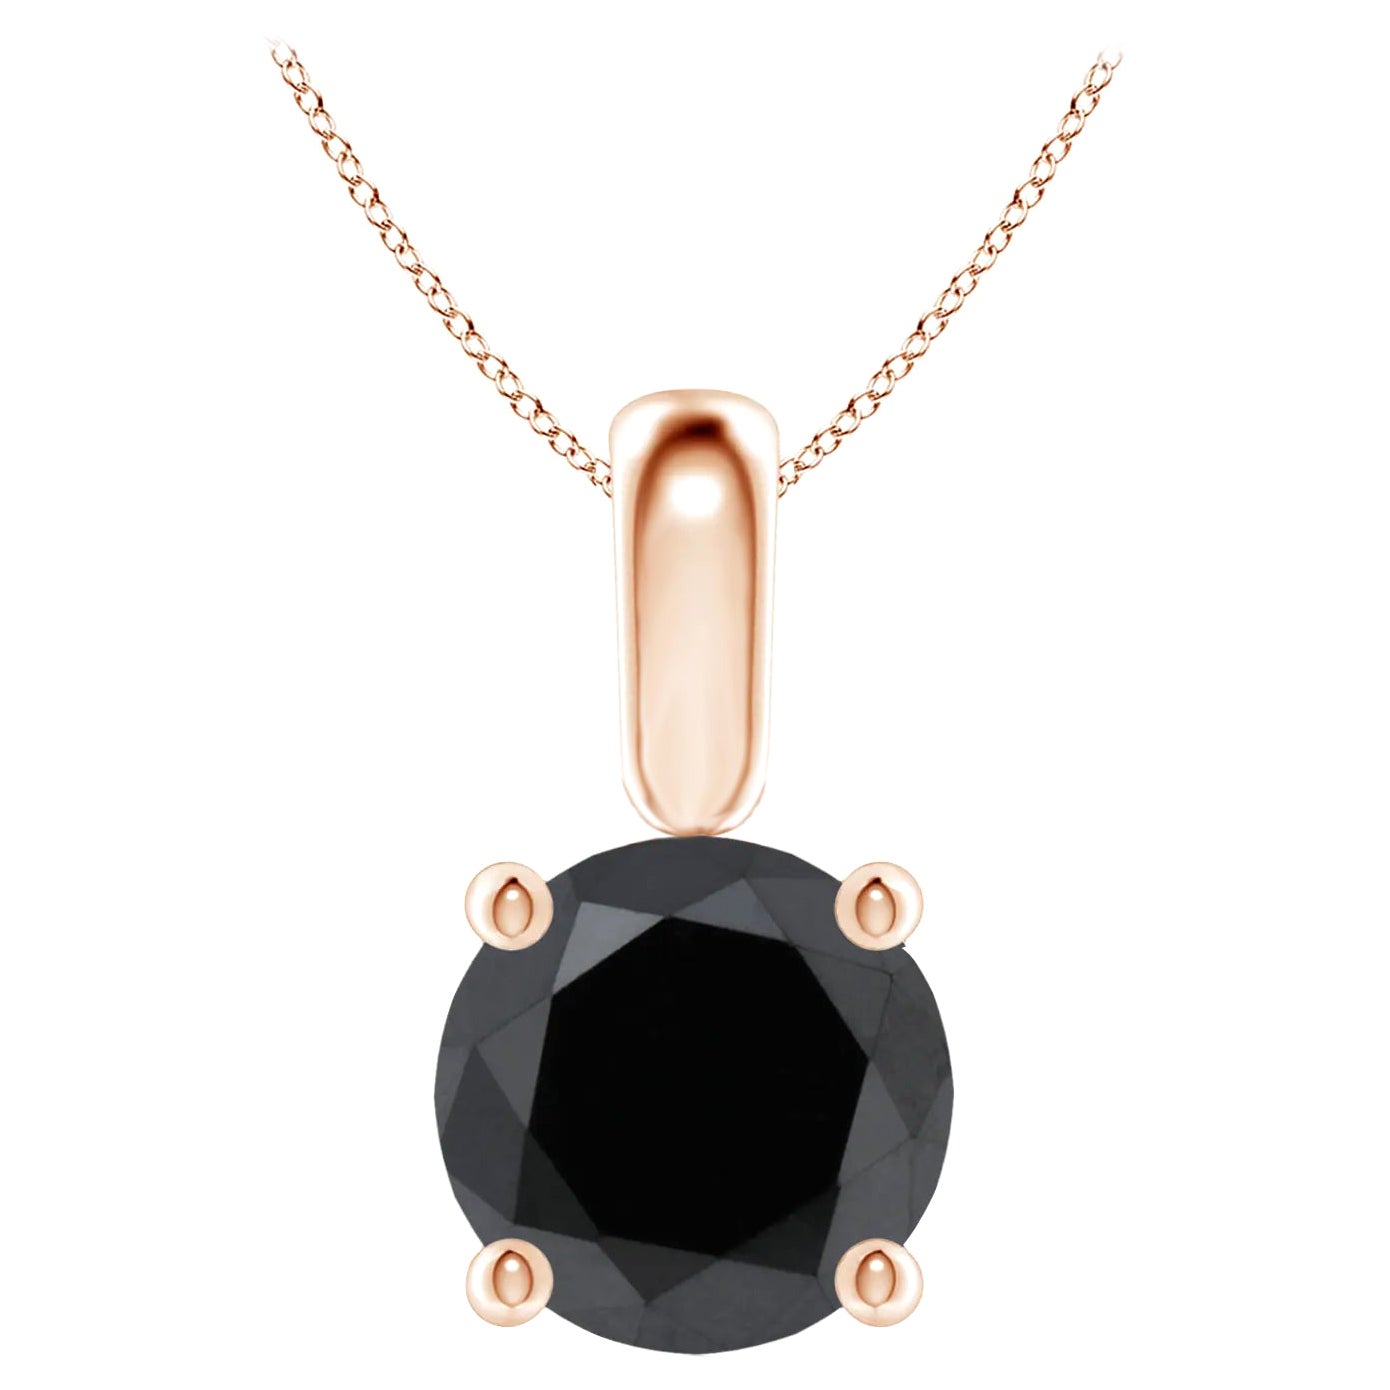 1.76 Carat Round Black Diamond Solitaire Pendant Necklace in 14K Rose Gold